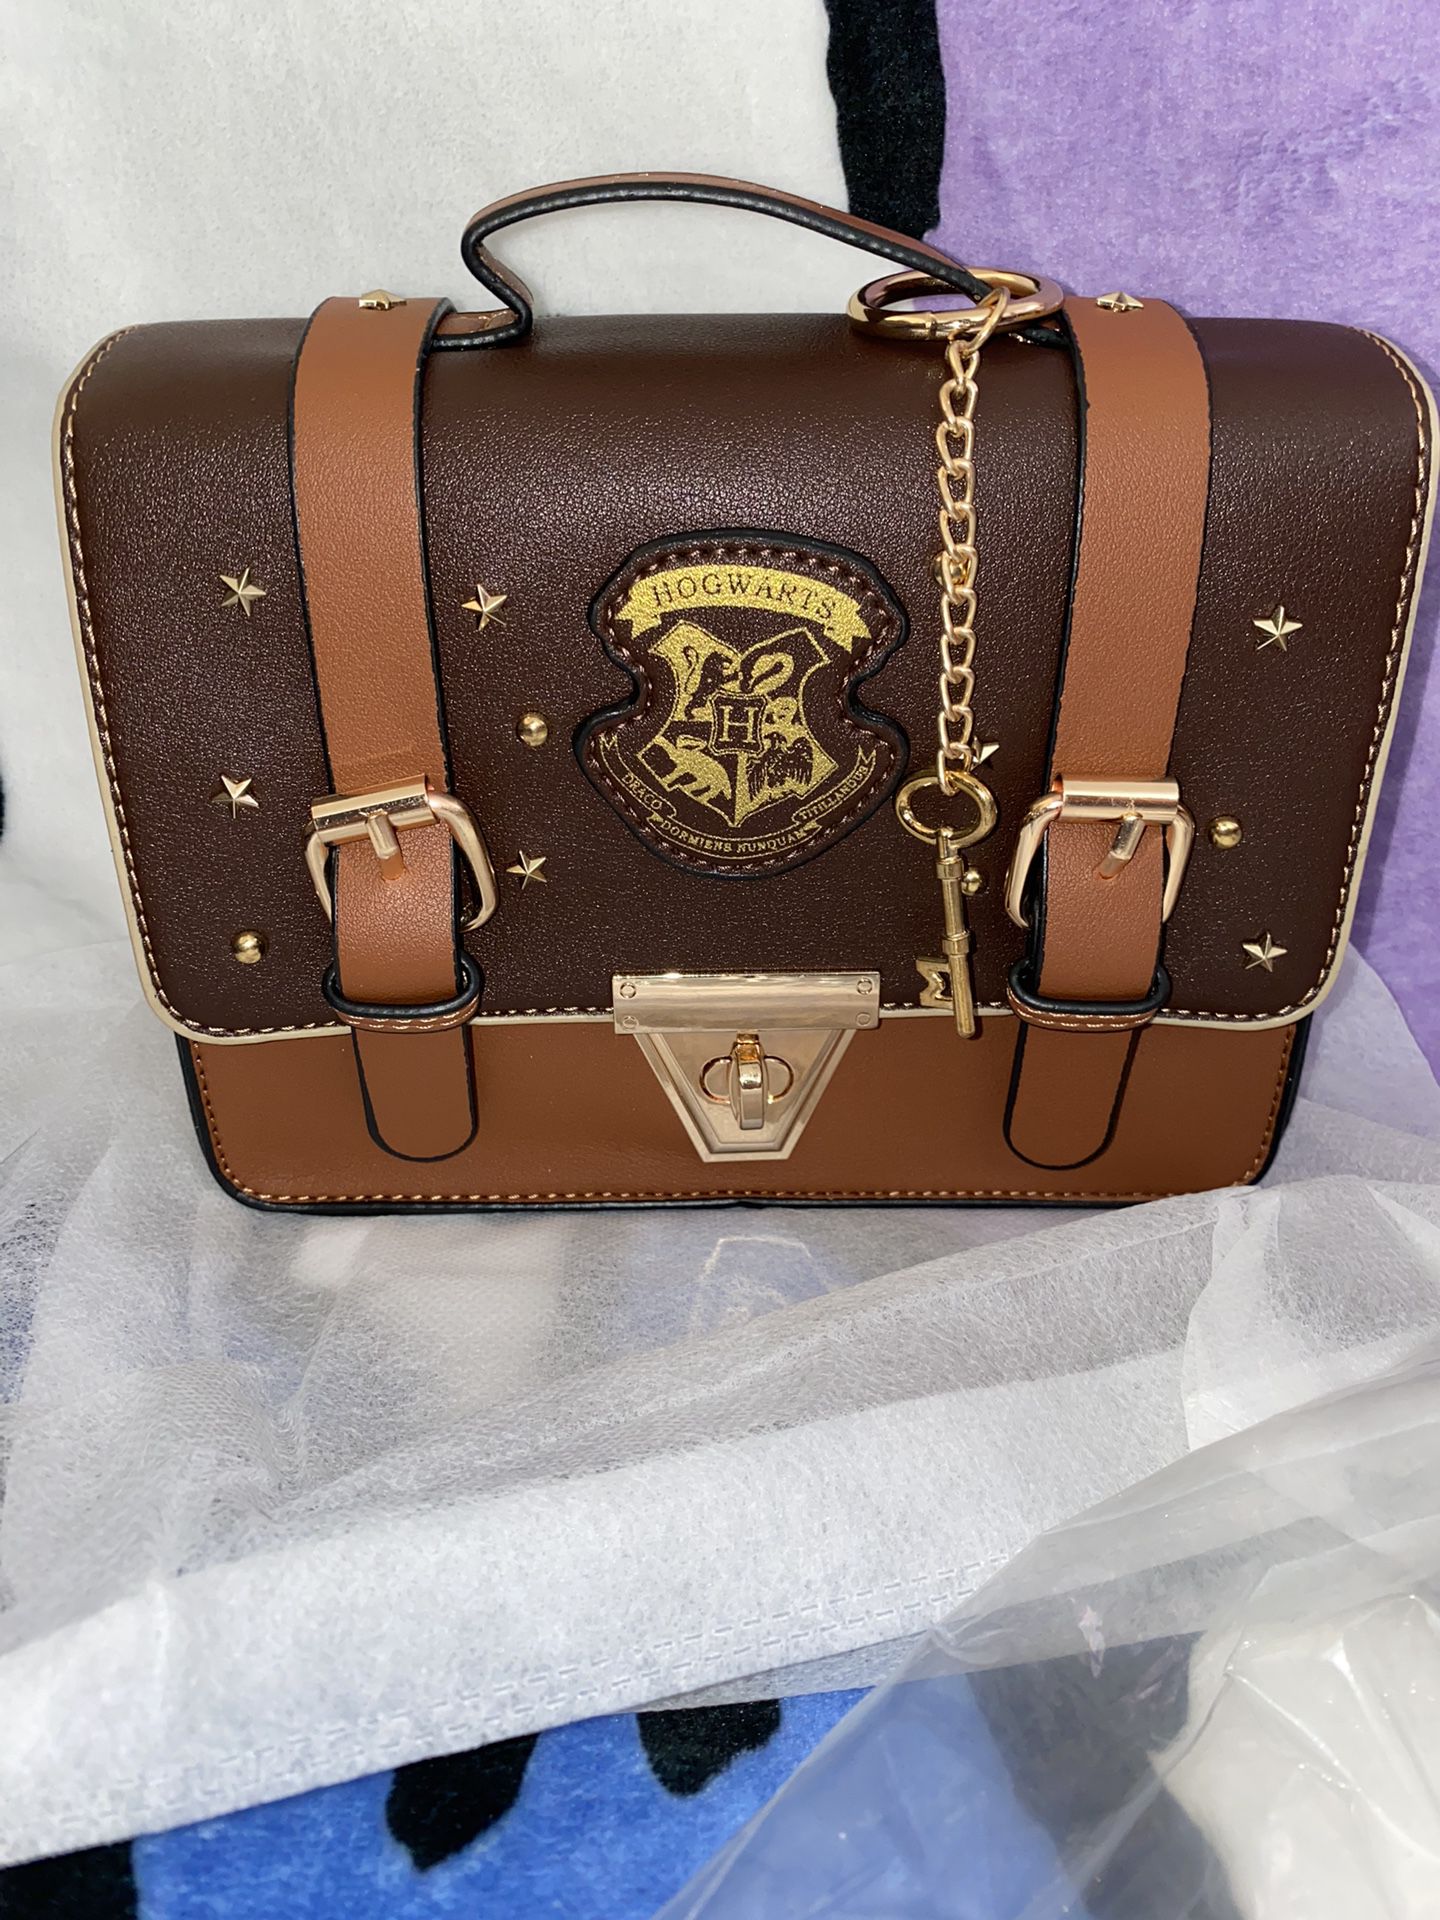 Harry Potter Purse/Crossbody Bag 